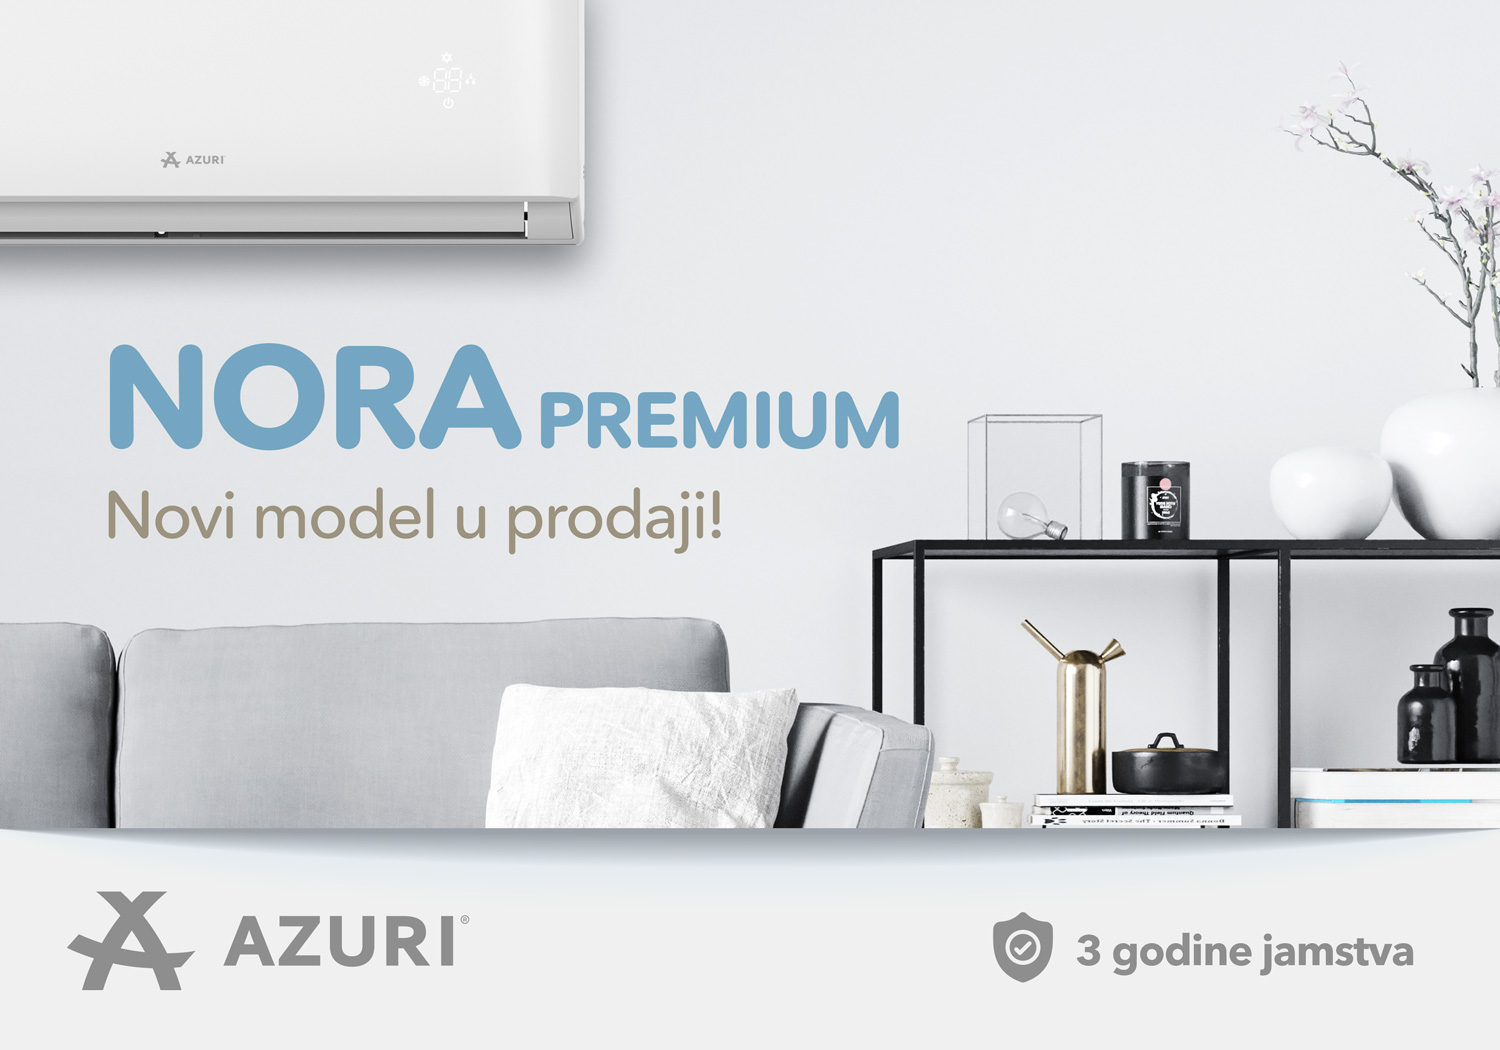 NOVO: AZURI Nora Premium